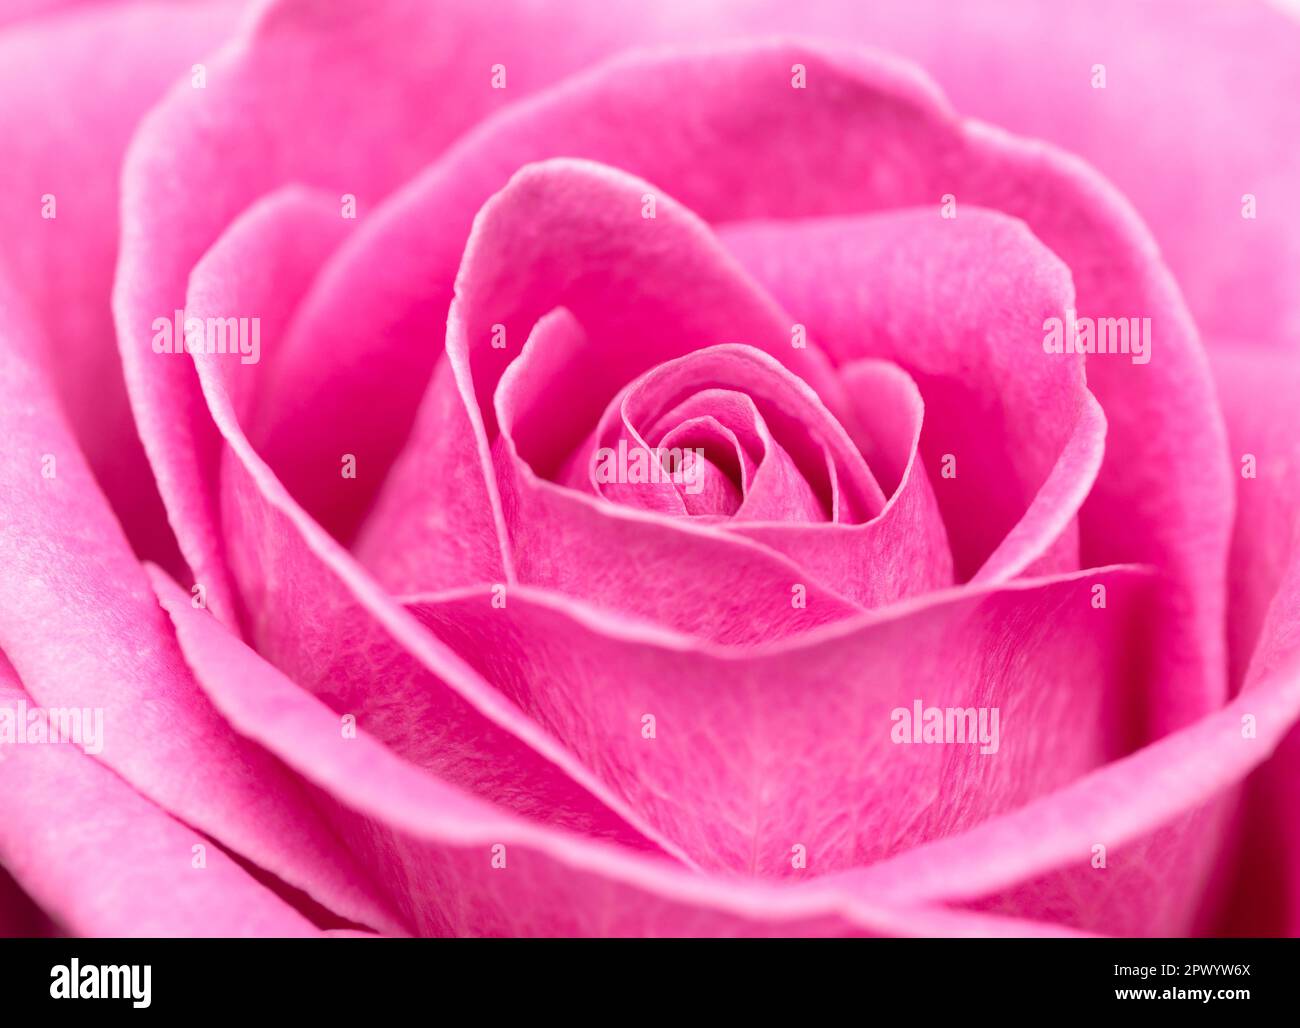 macro shot of fresh pink tea rose petals, rose texture background as symbol of love, elegance, romance. Selective focus Stock Photo